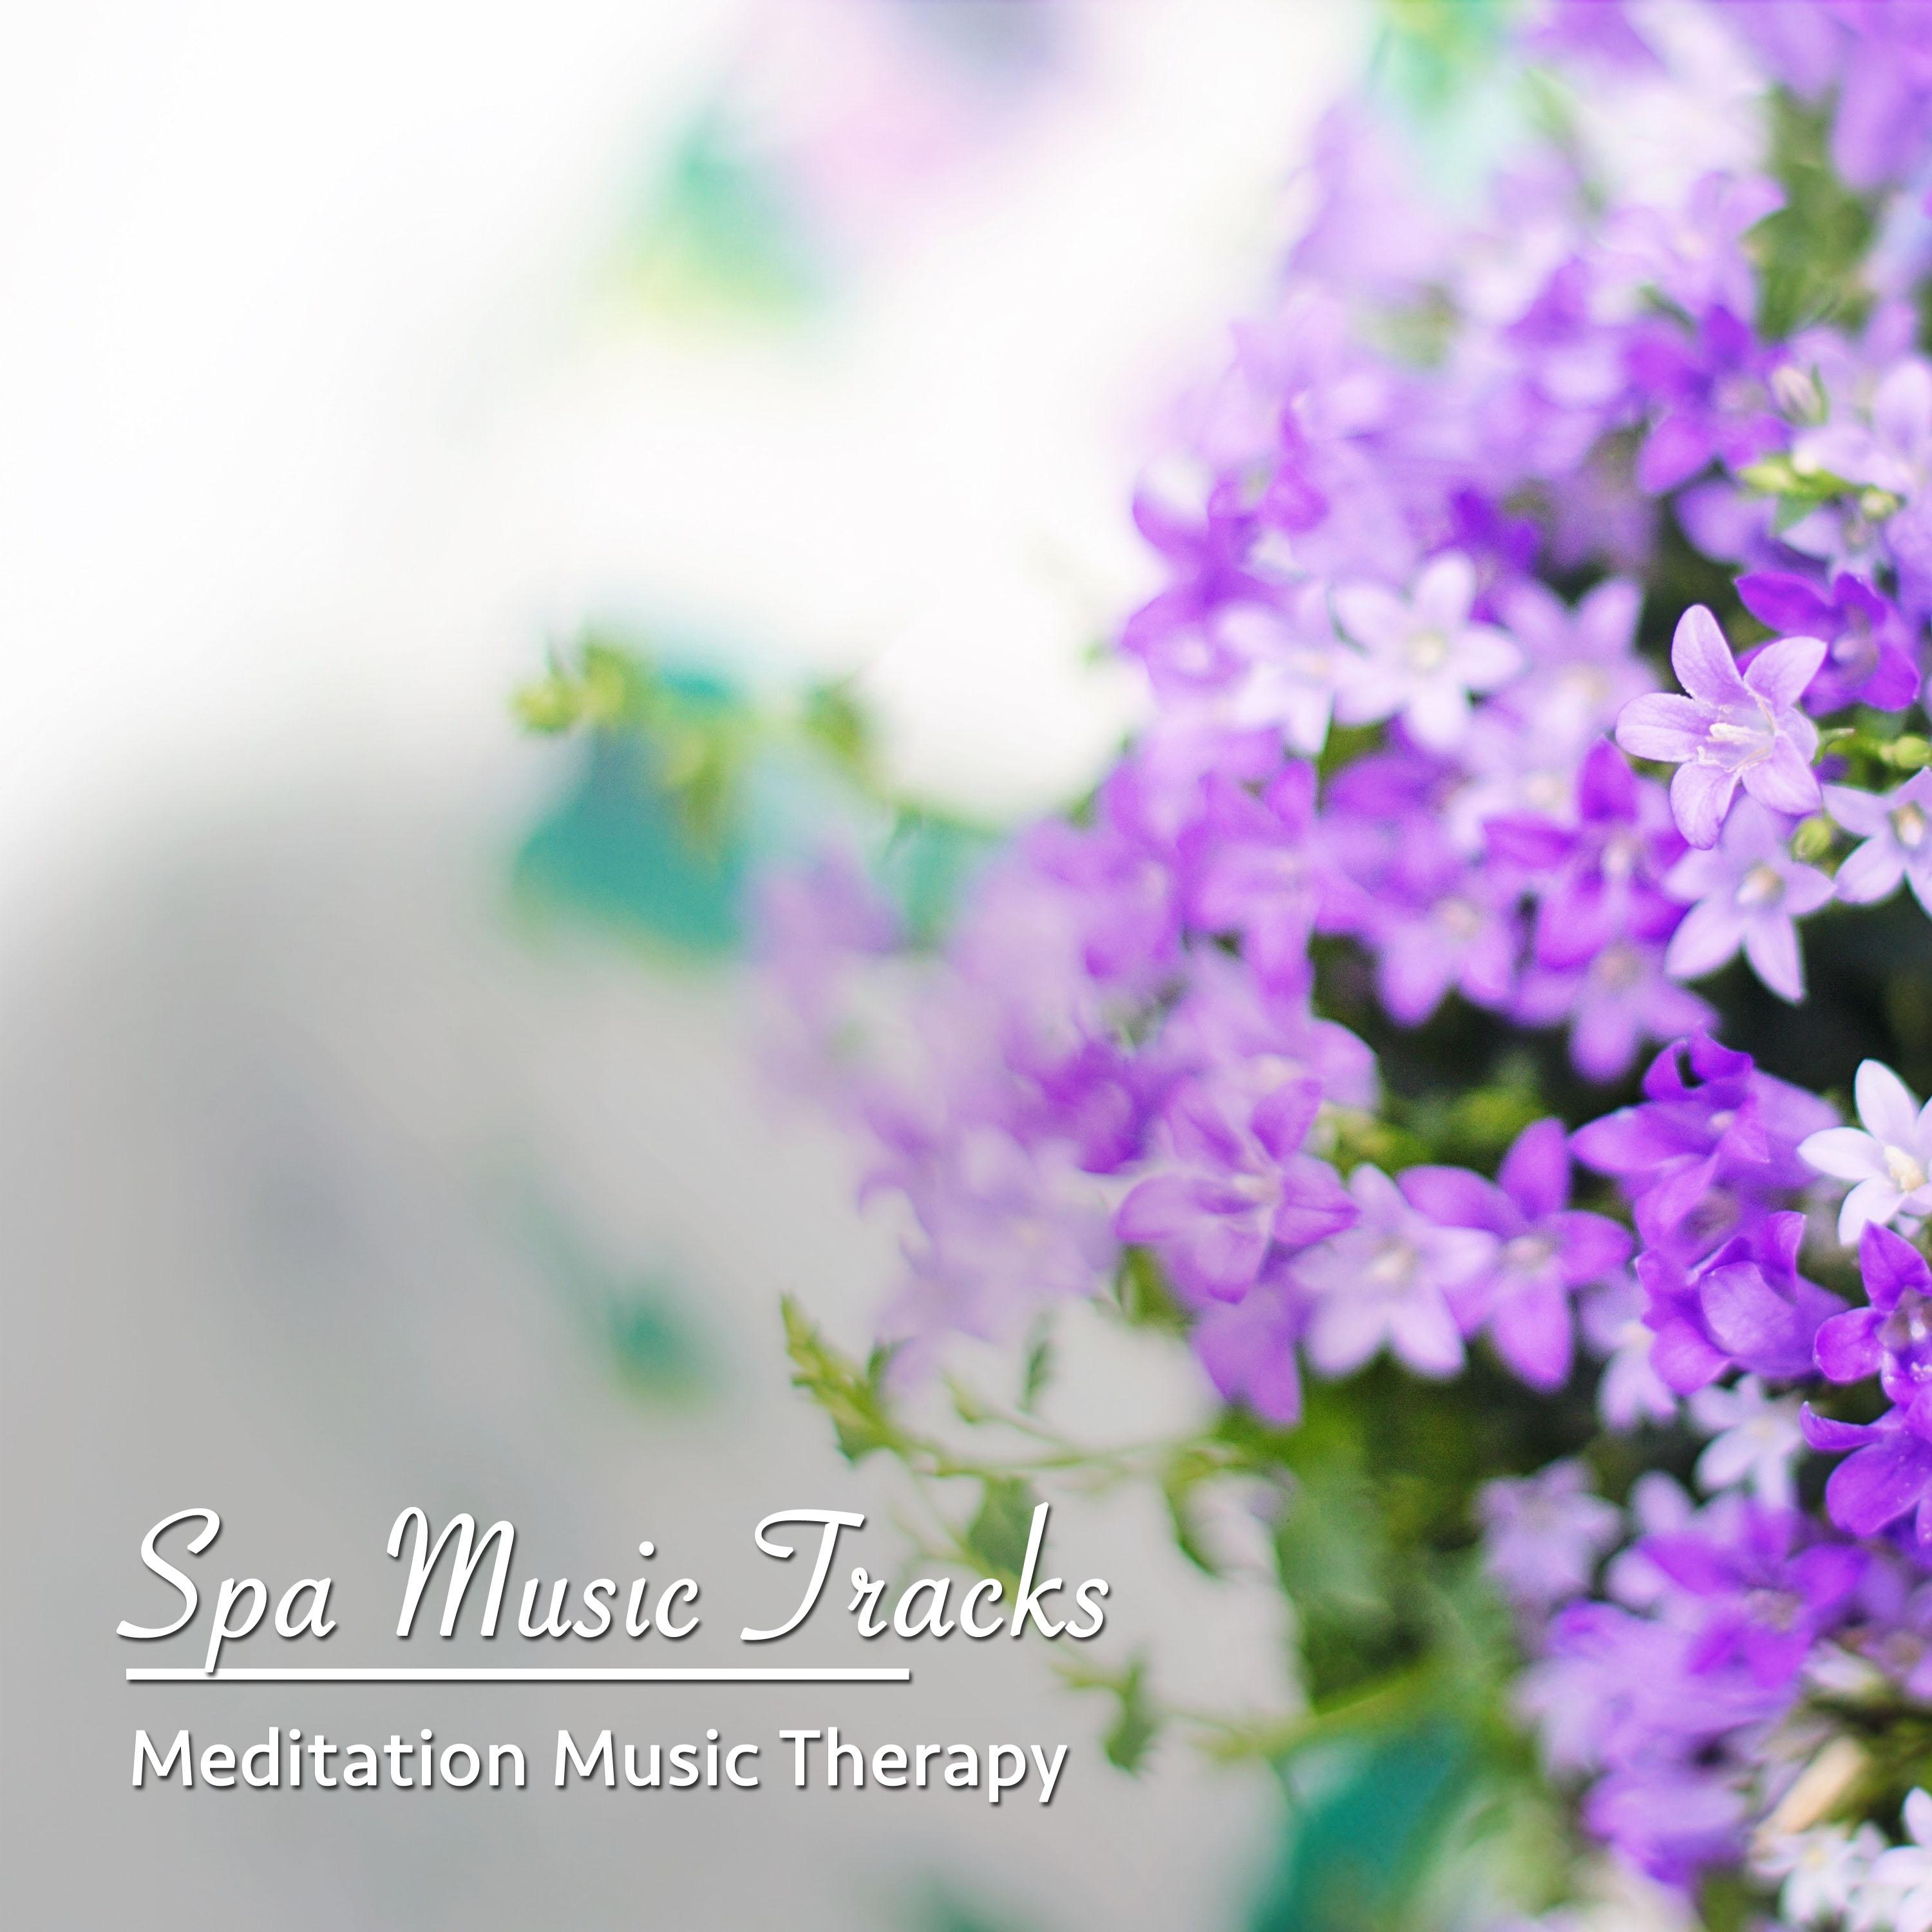 16 Spa Music Tracks - Meditation Music Therapy